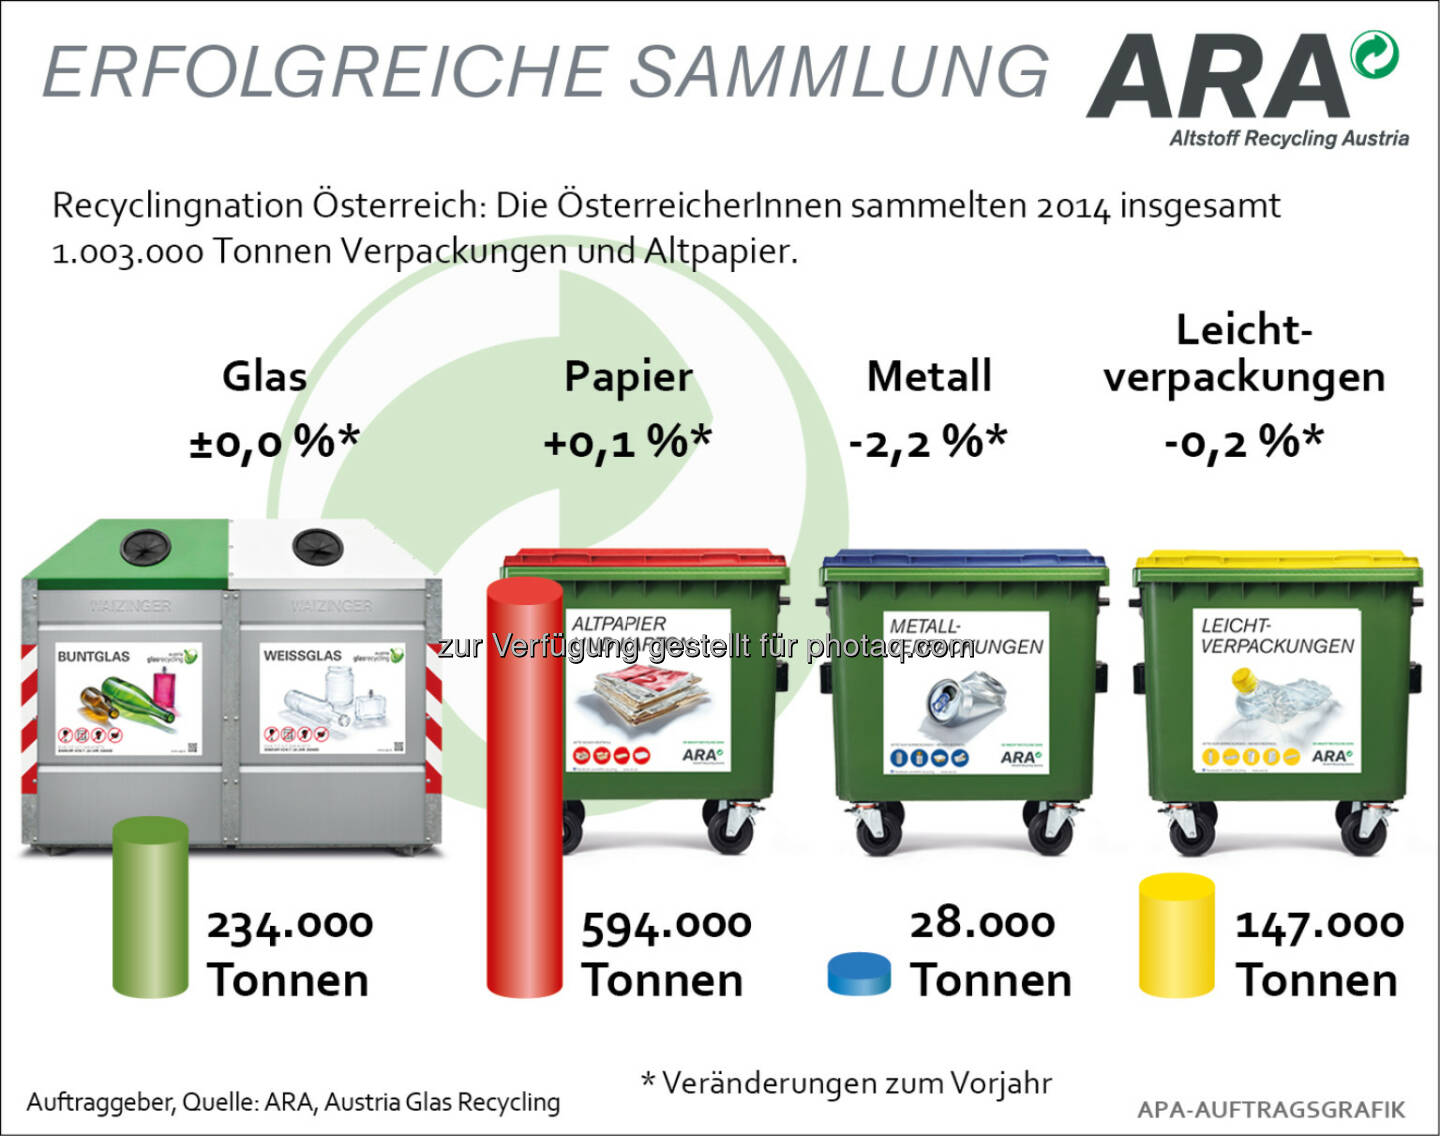 ARA Altstoff Recycling Austria AG: Über 1 Million Tonnen Verpackungen gesammelt